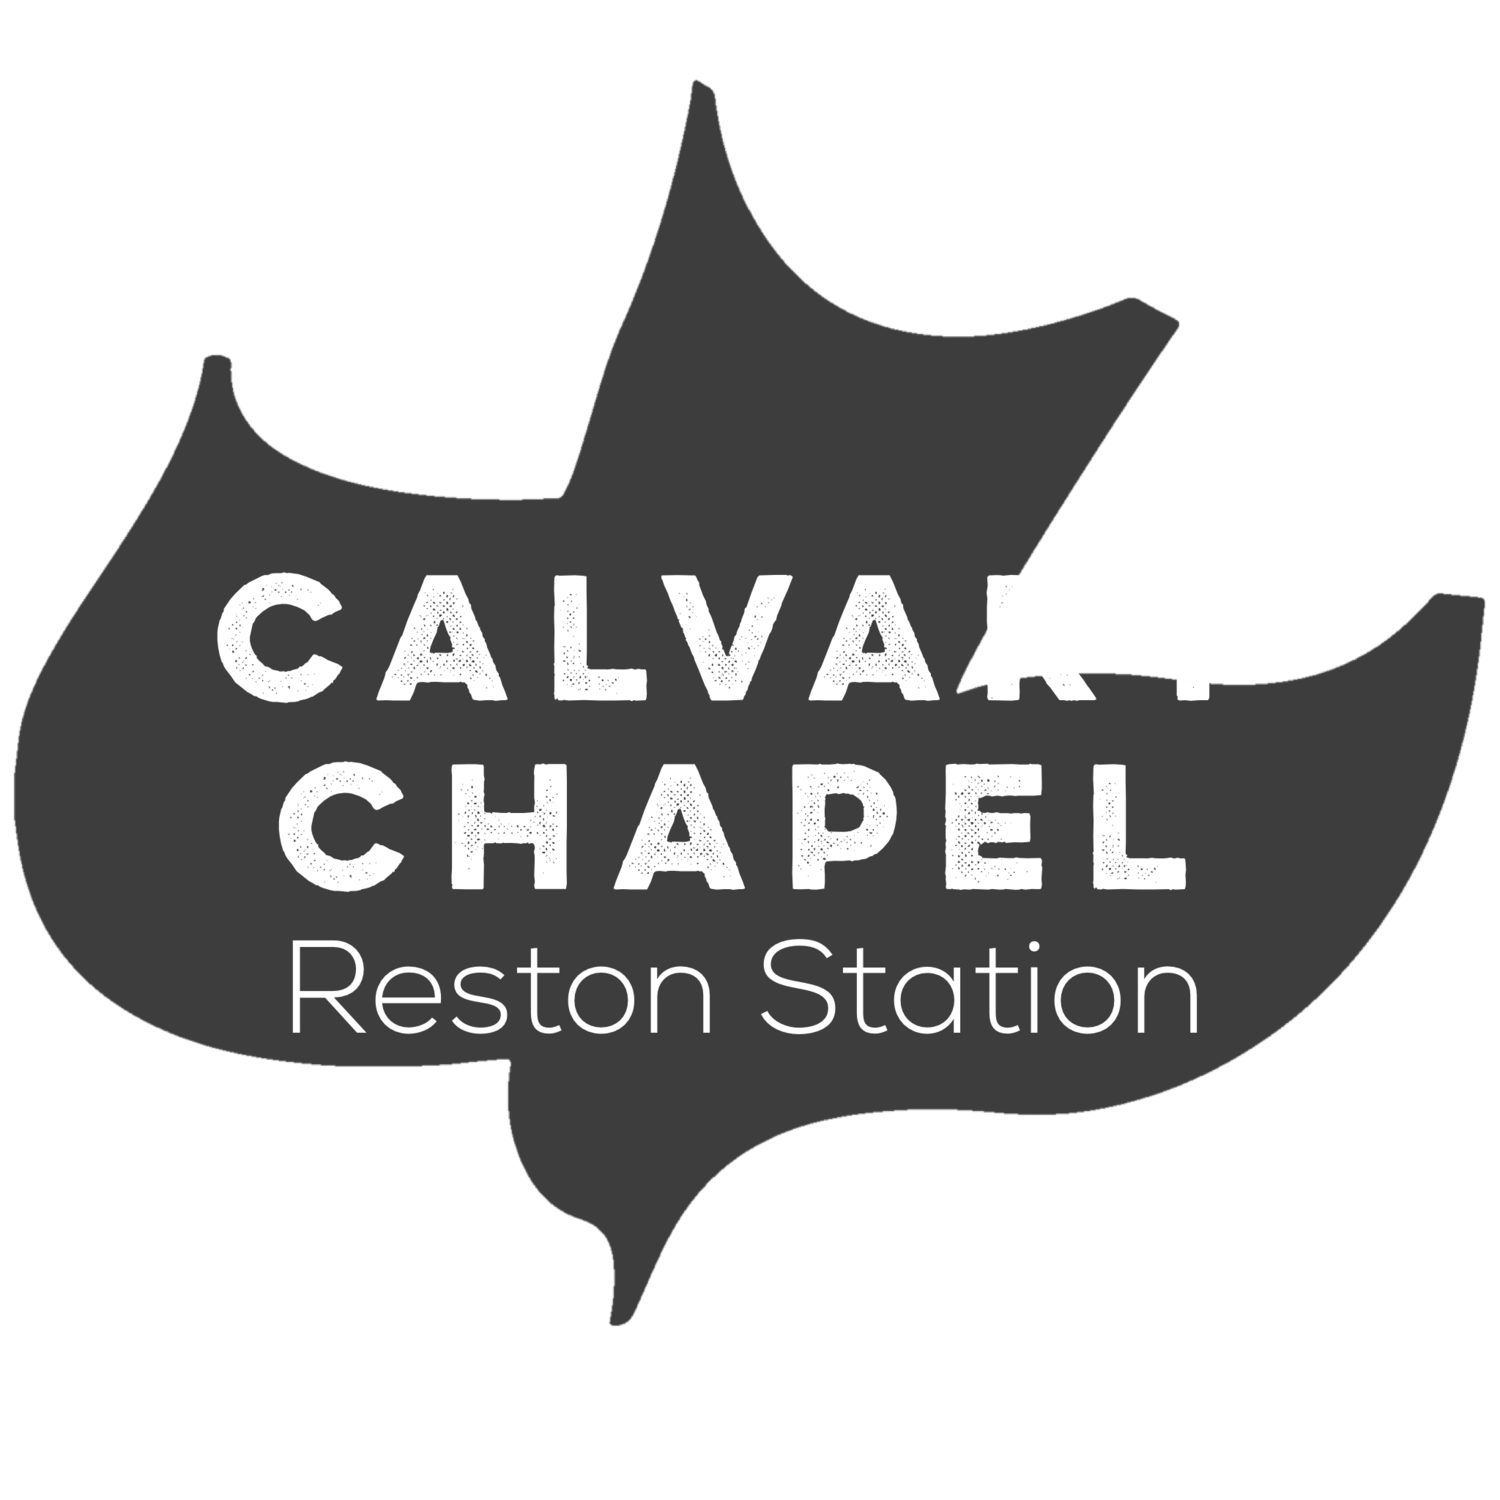 Calvary Chapel Reston Station